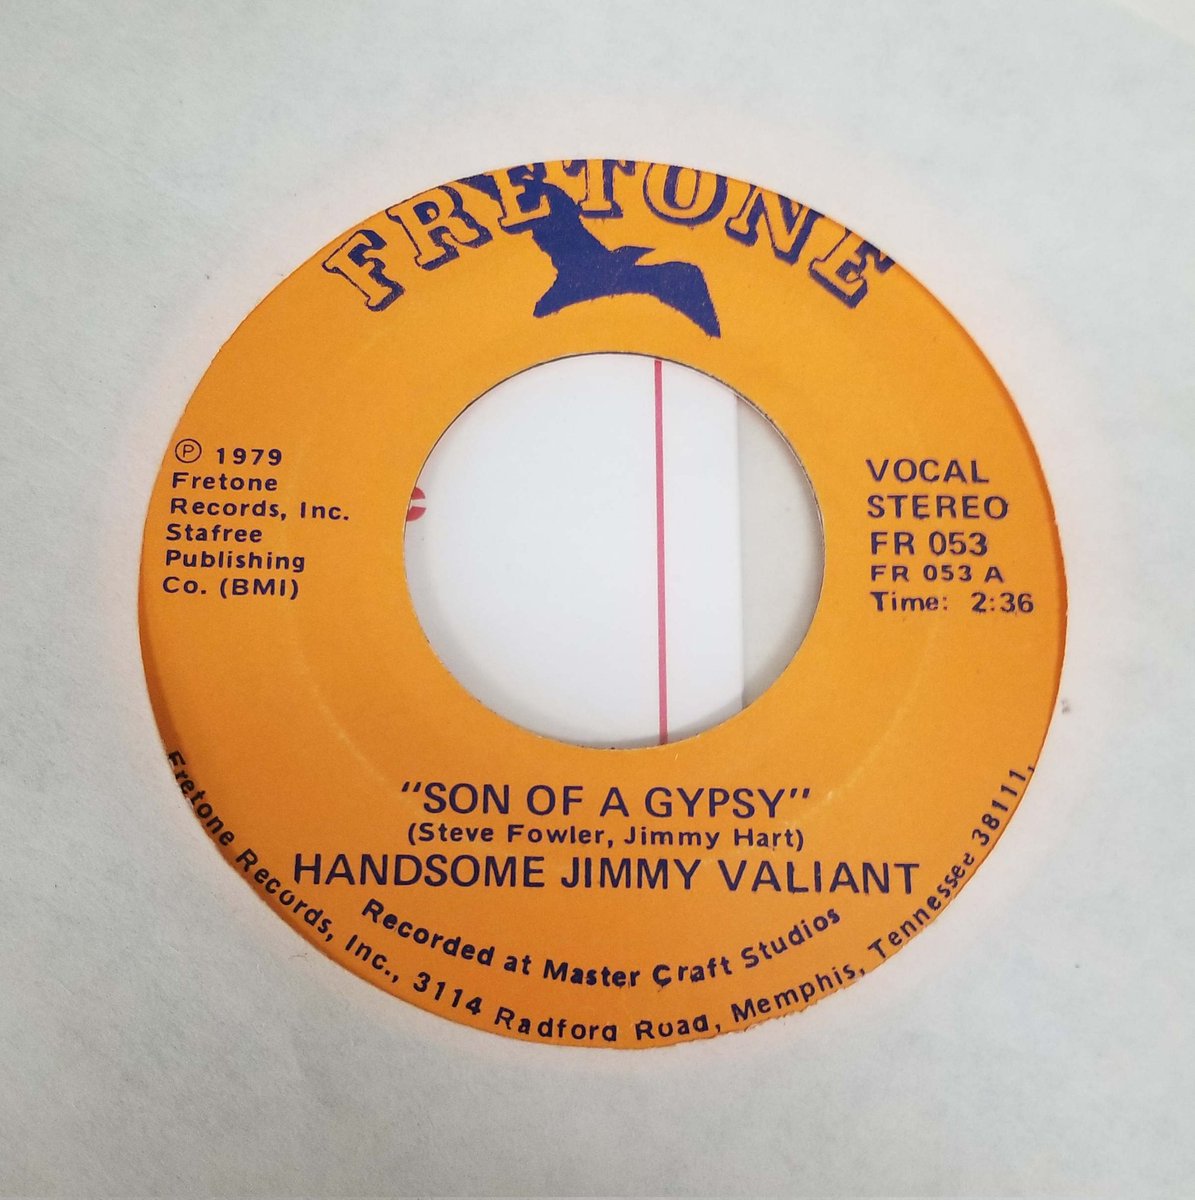 Handsome Jimmy Valiant record. Memphis late 1970s. @TheJimCornette @RealJimmyHart @JerryLawler